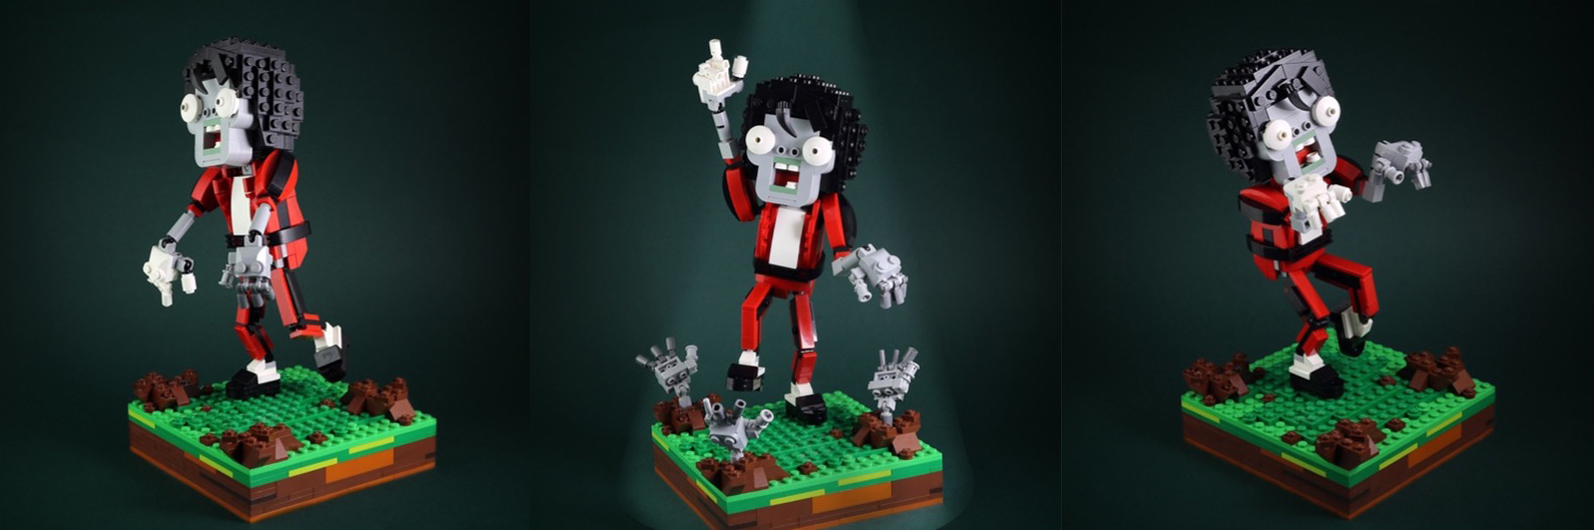    Lego Builder Creates Dancing MJ ‘Thriller’ Zombie 